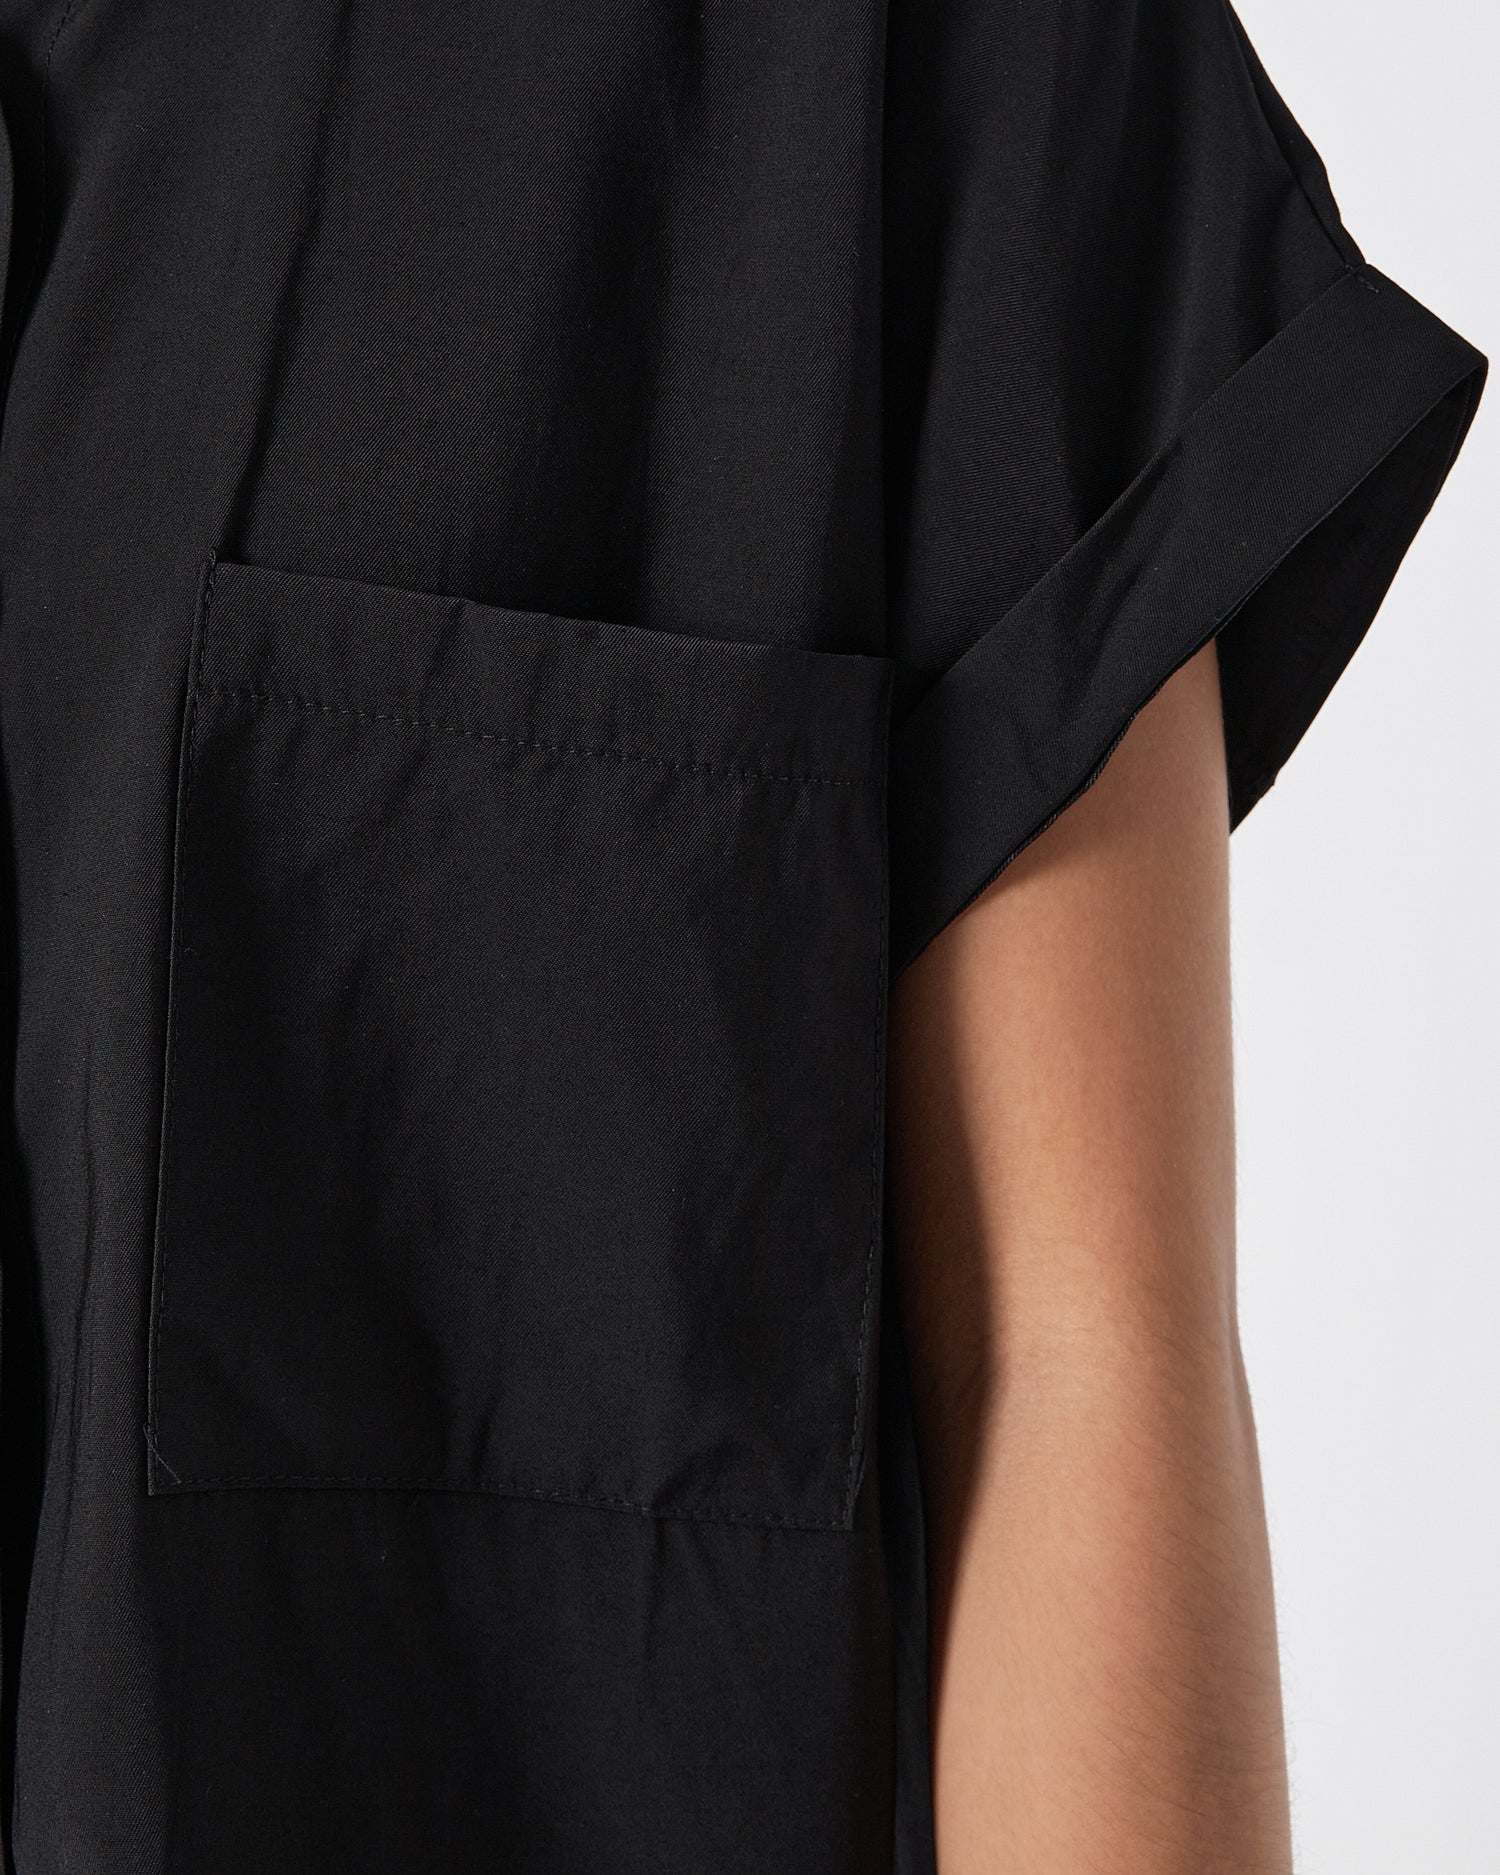 Lady Black Satin Shirts Short Sleeve 17.90